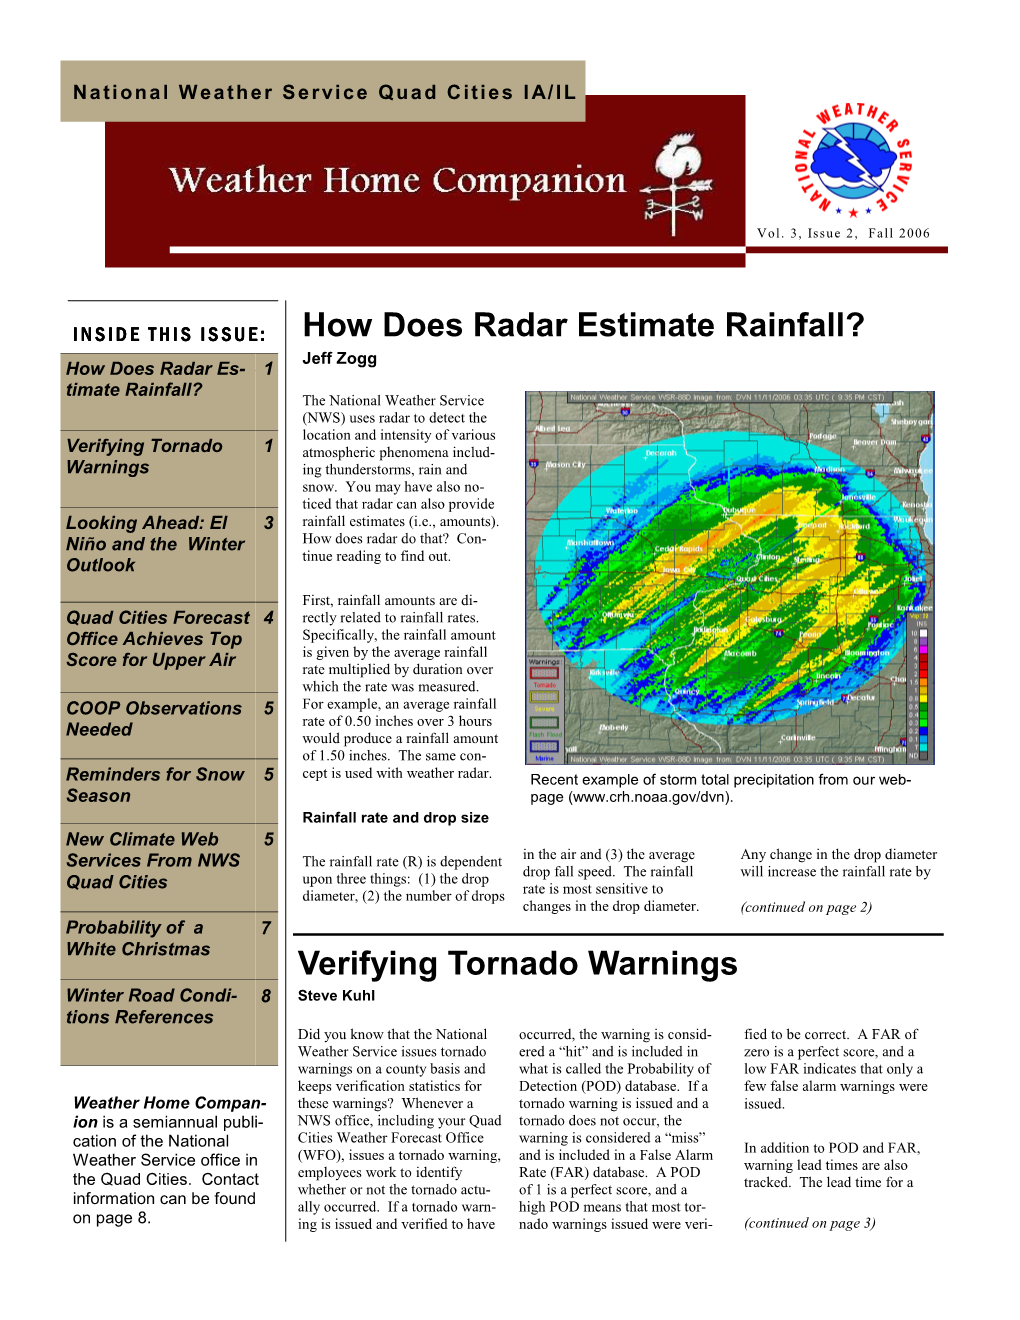 How Does Radar Estimate Rainfall? Verifying Tornado Warnings